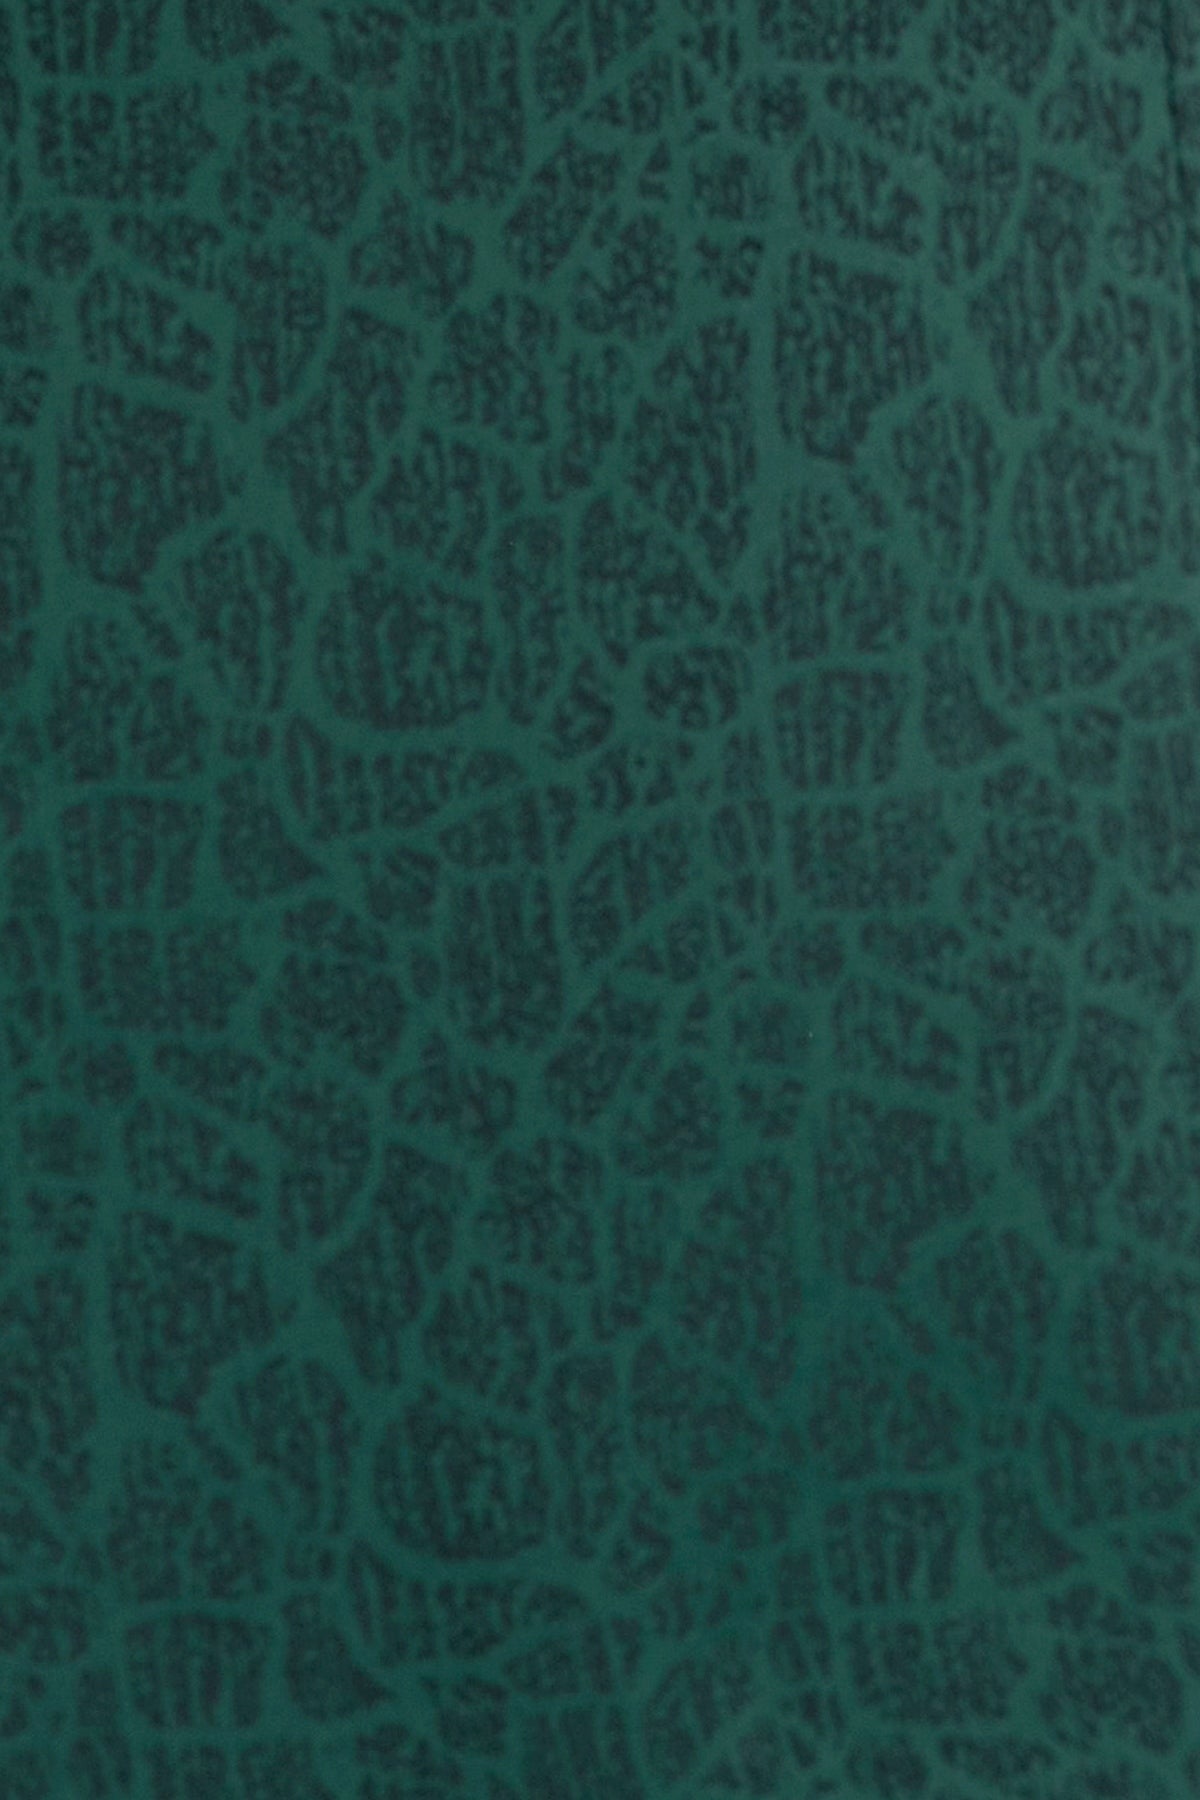 Green Cracked Pattern Textured Fabric Tuxedo